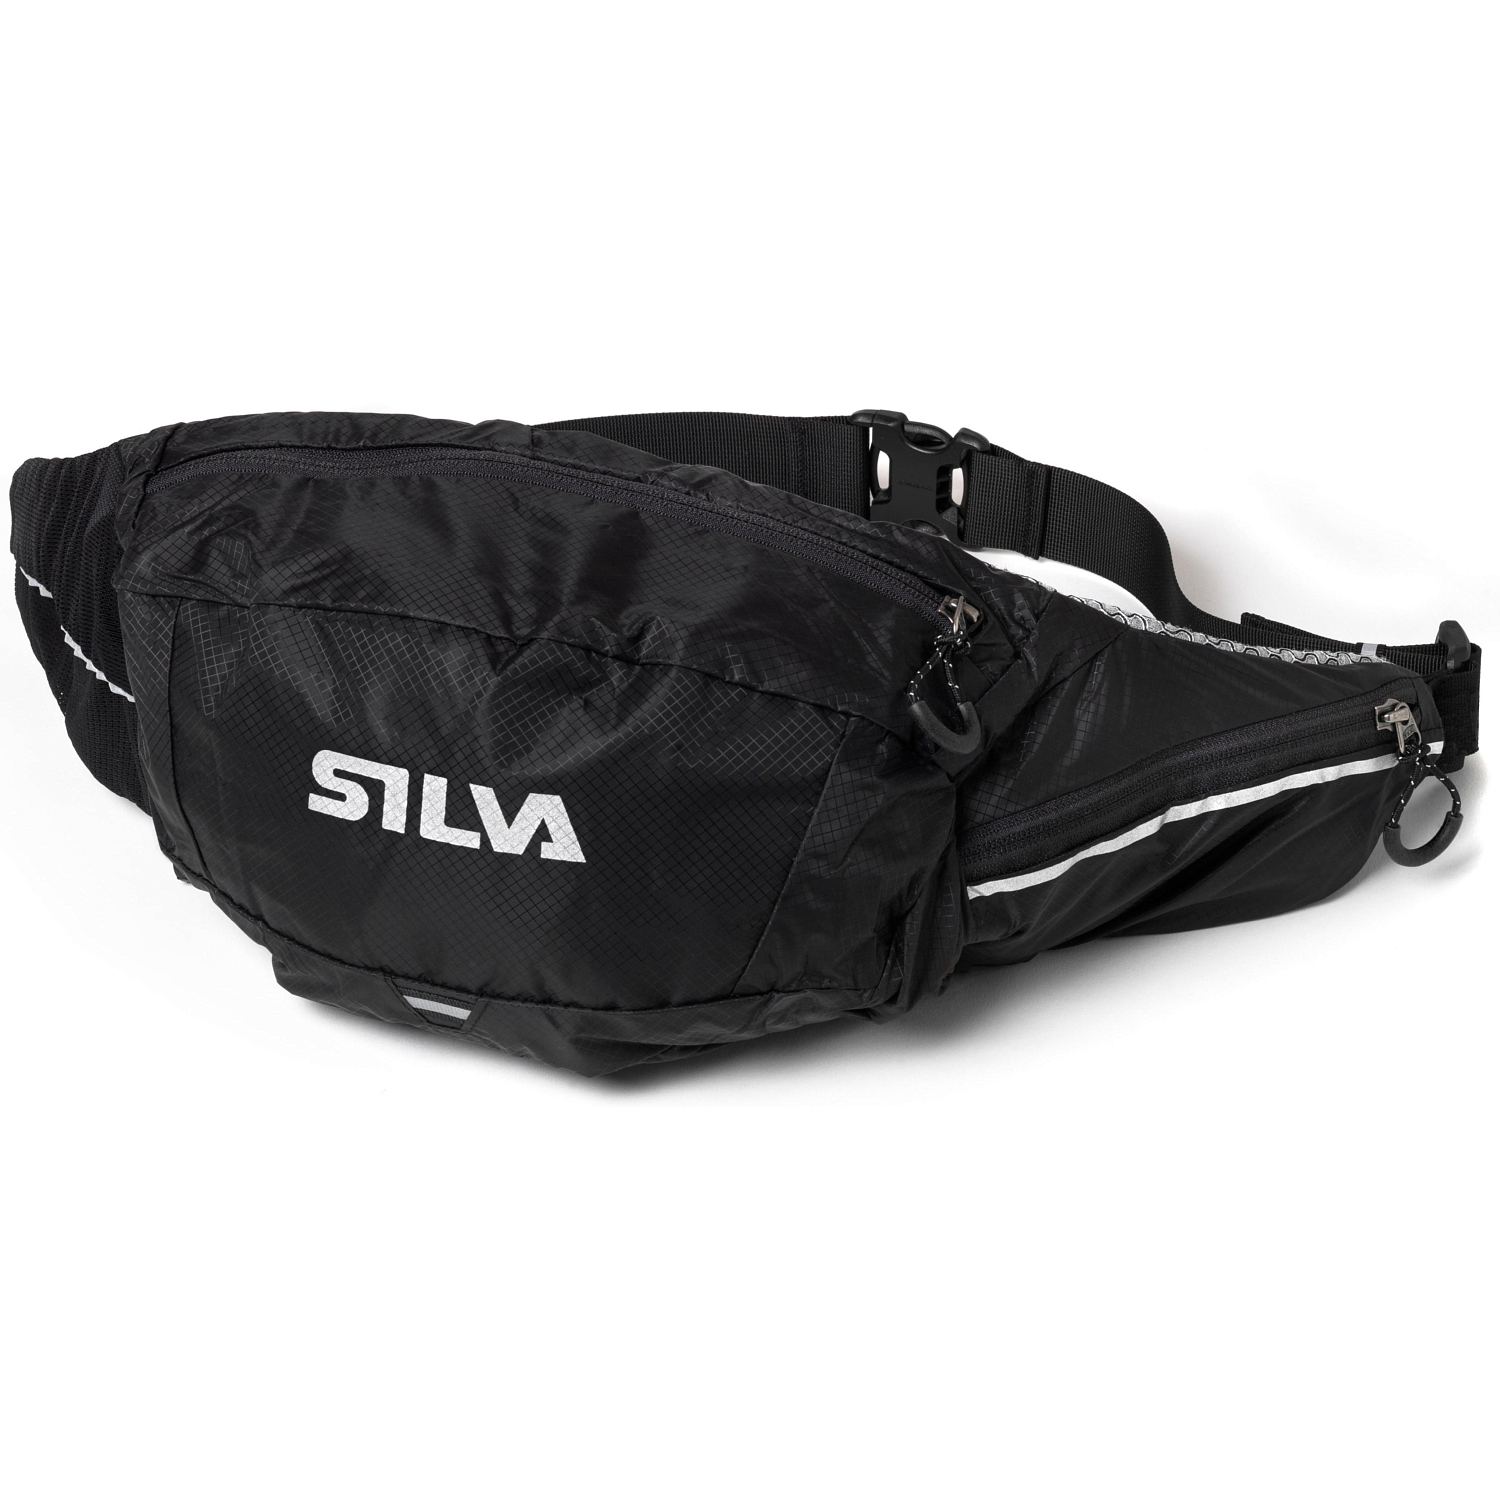 Поясная сумка Silva Race 4